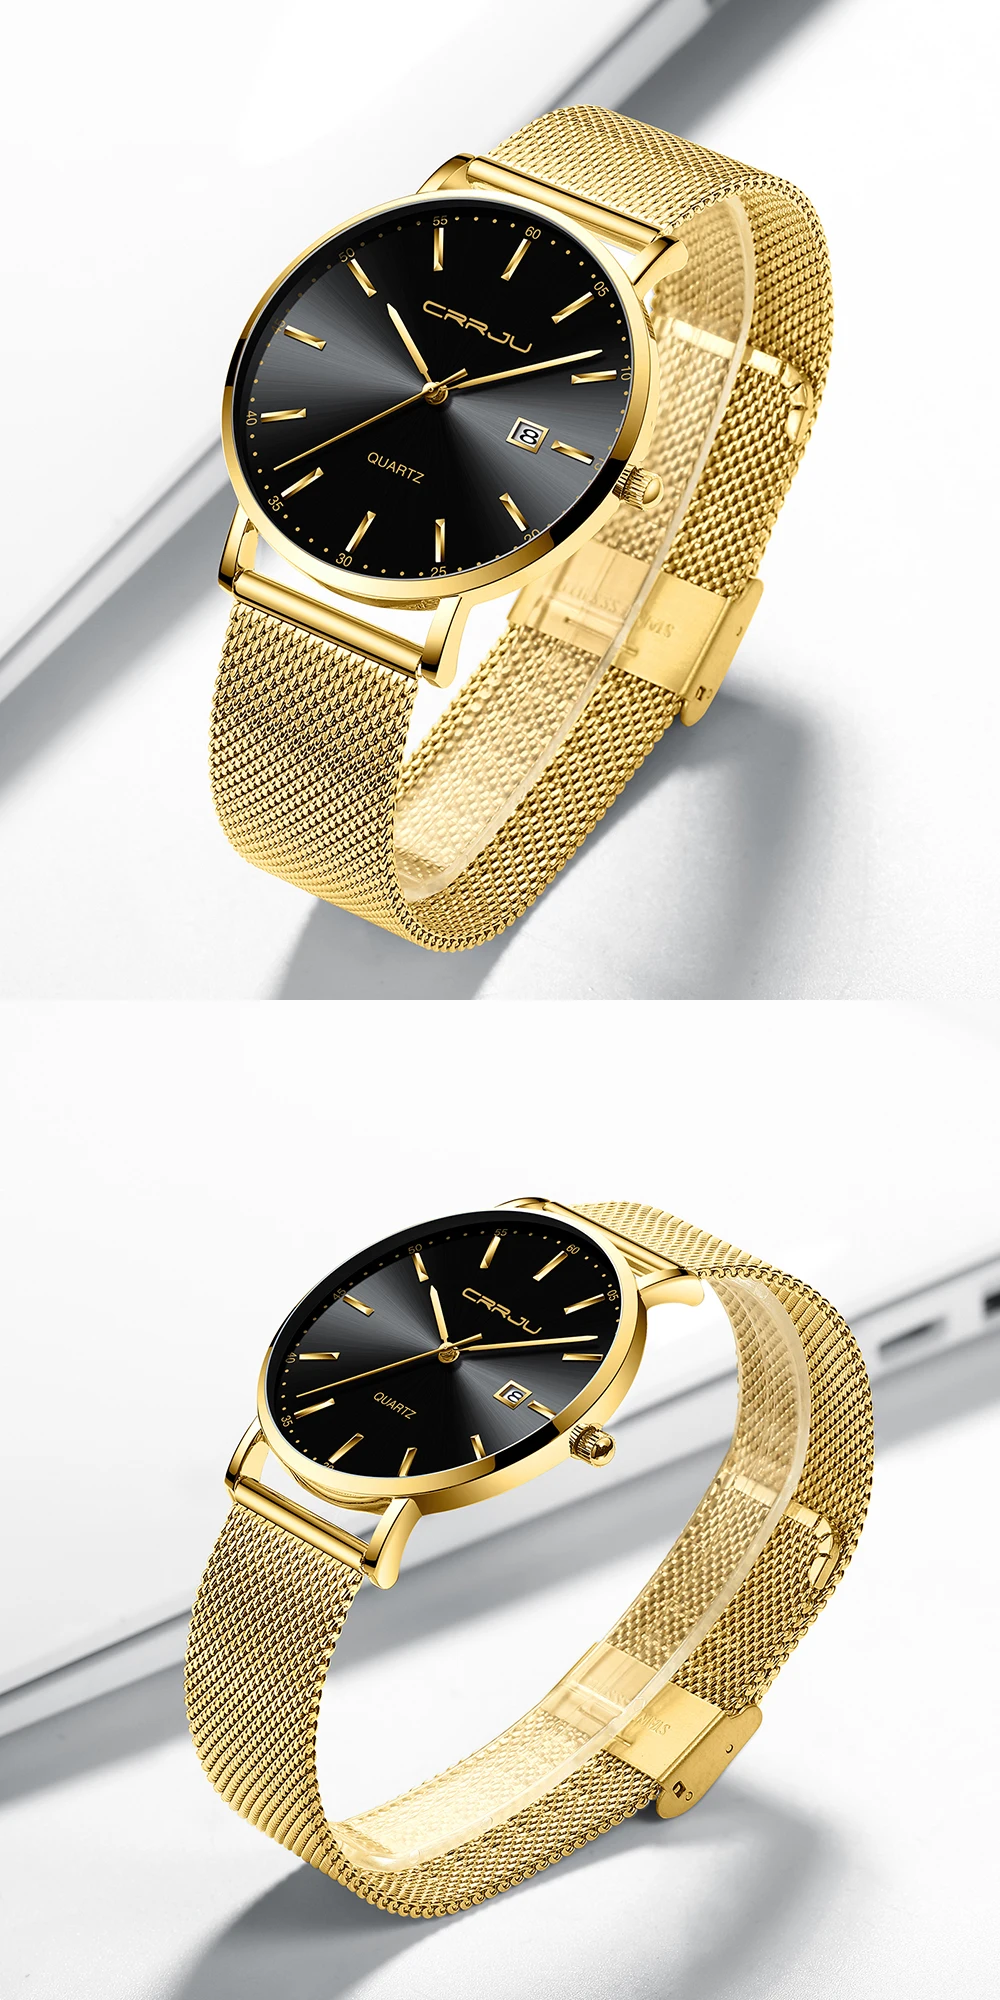 Reloj Mujer CRRJU женские часы Wonme's бизнес кварцевые часы дамские лидирующий бренд роскошные женские наручные часы для девушек